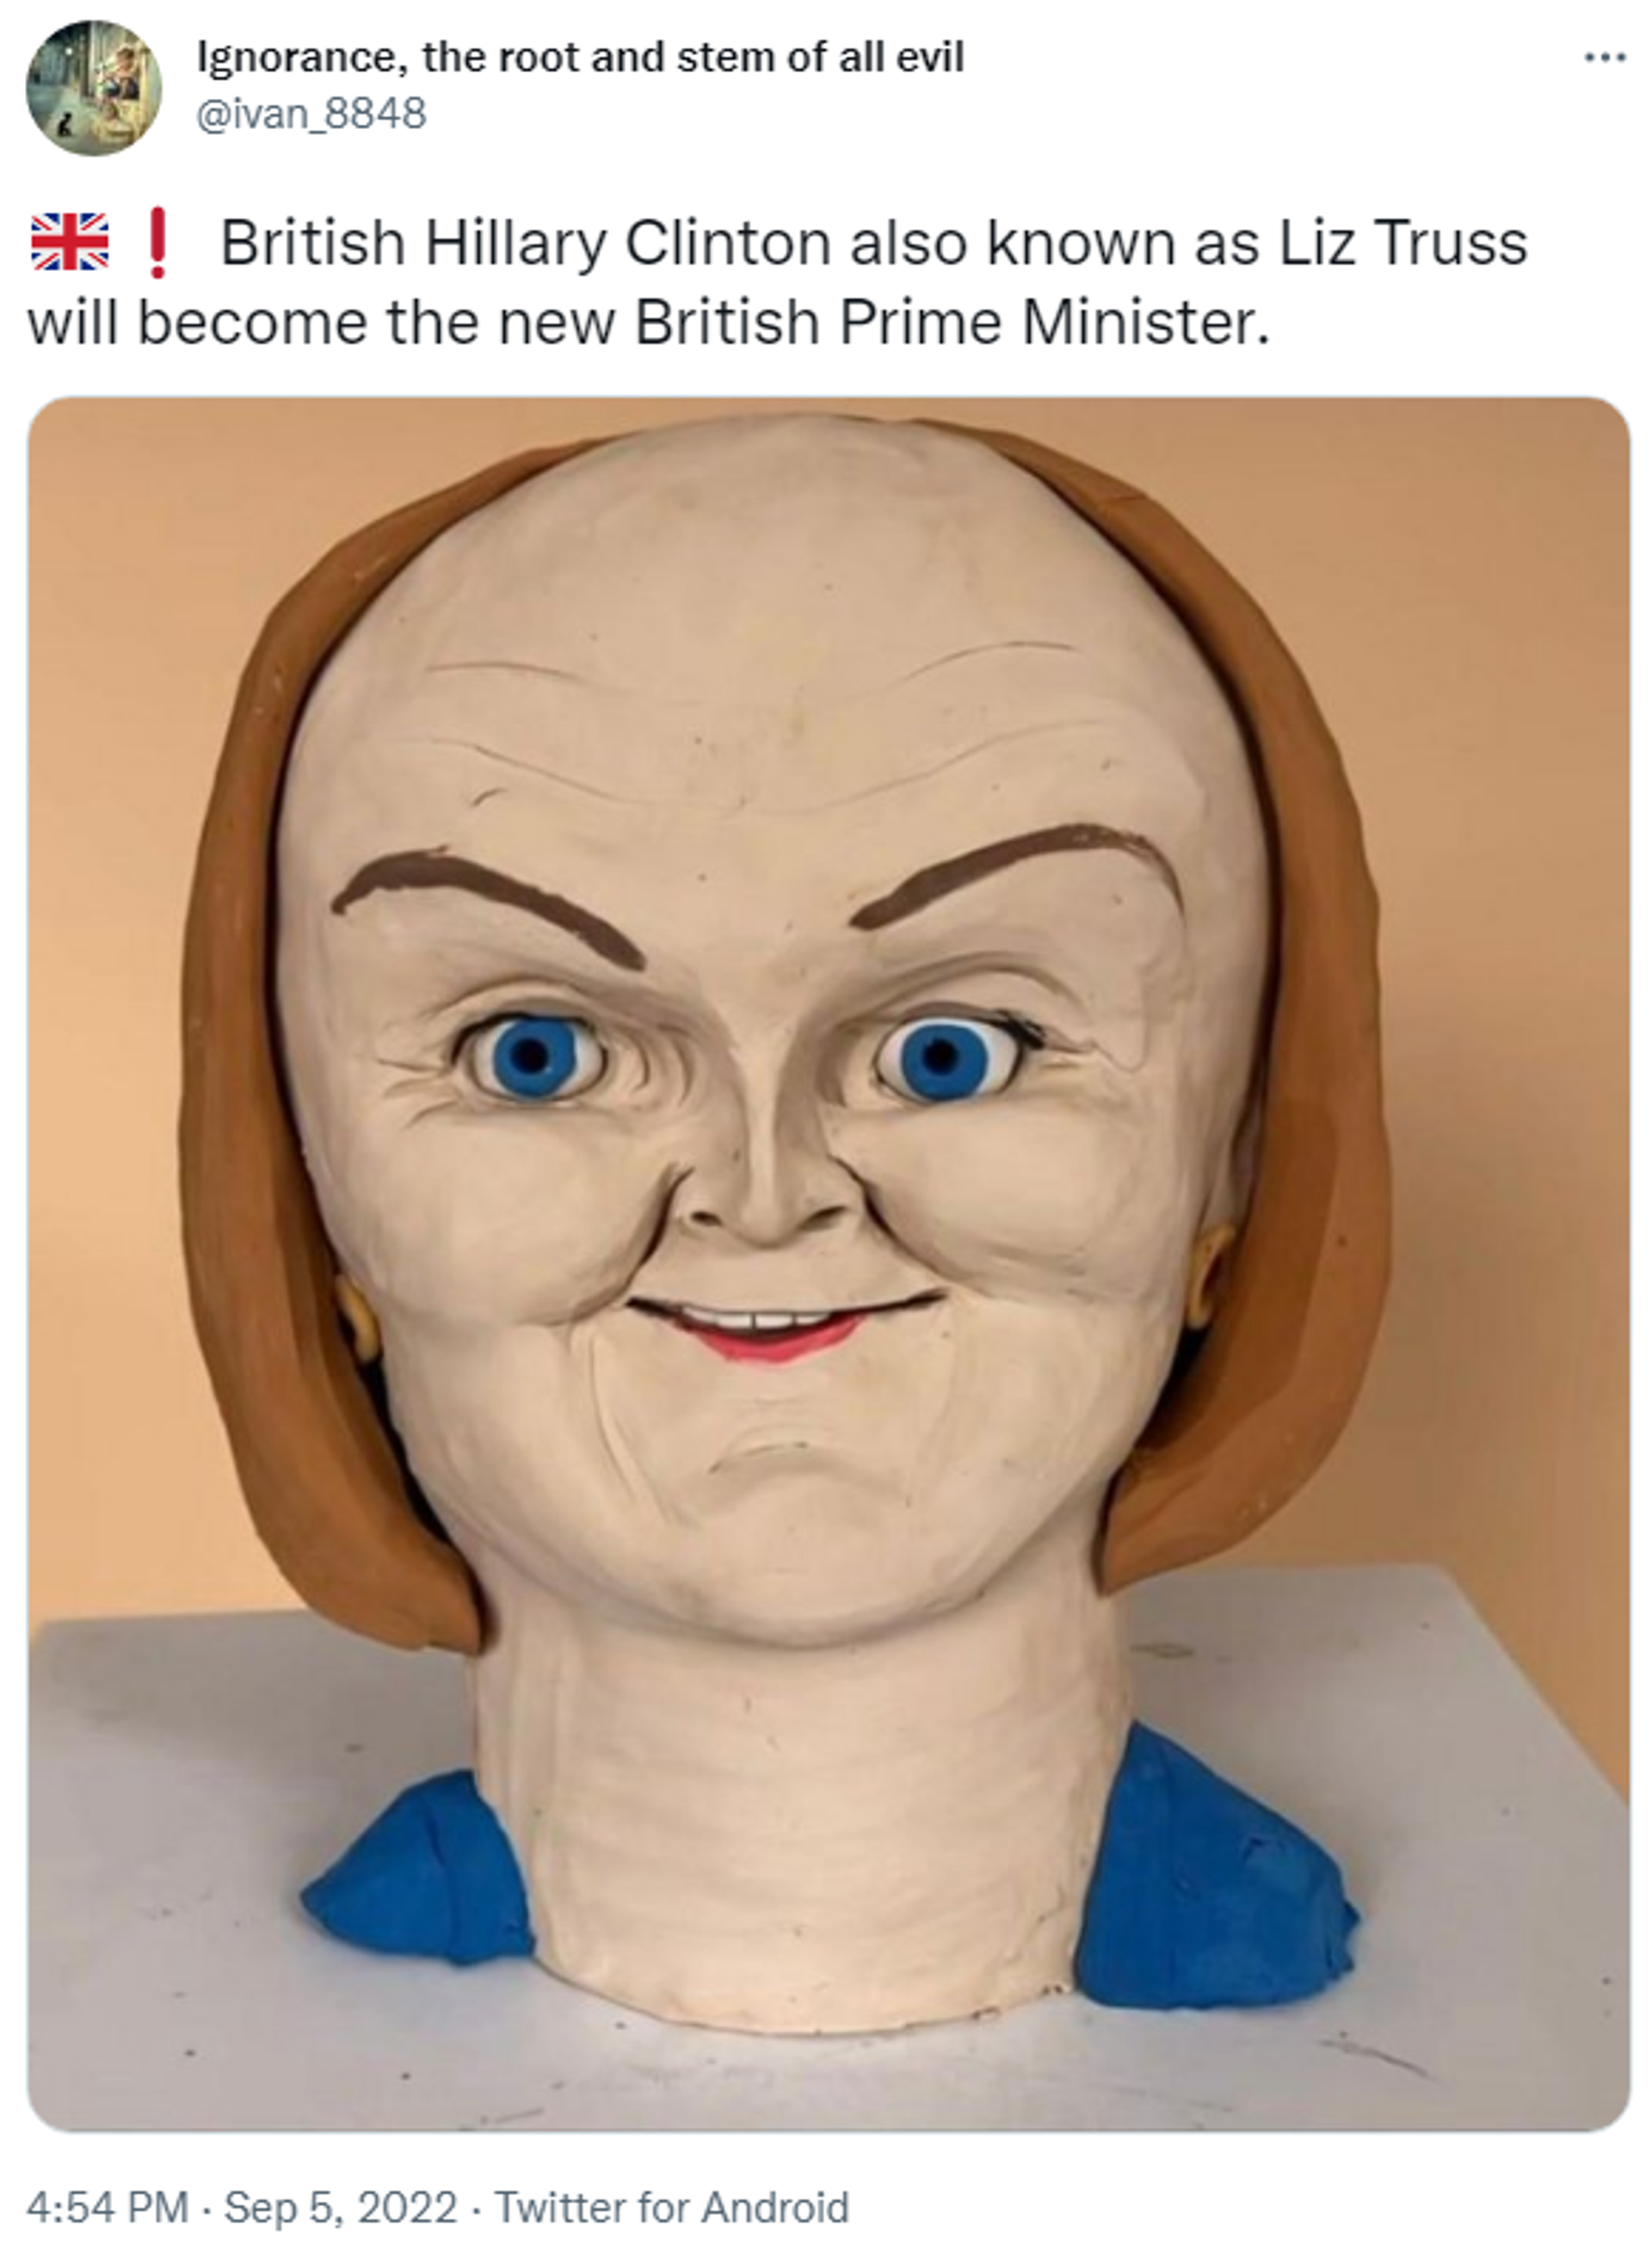 A Twitter user shares a funny image of new British Prime Minister Liz Truss - Sputnik International, 1920, 05.09.2022